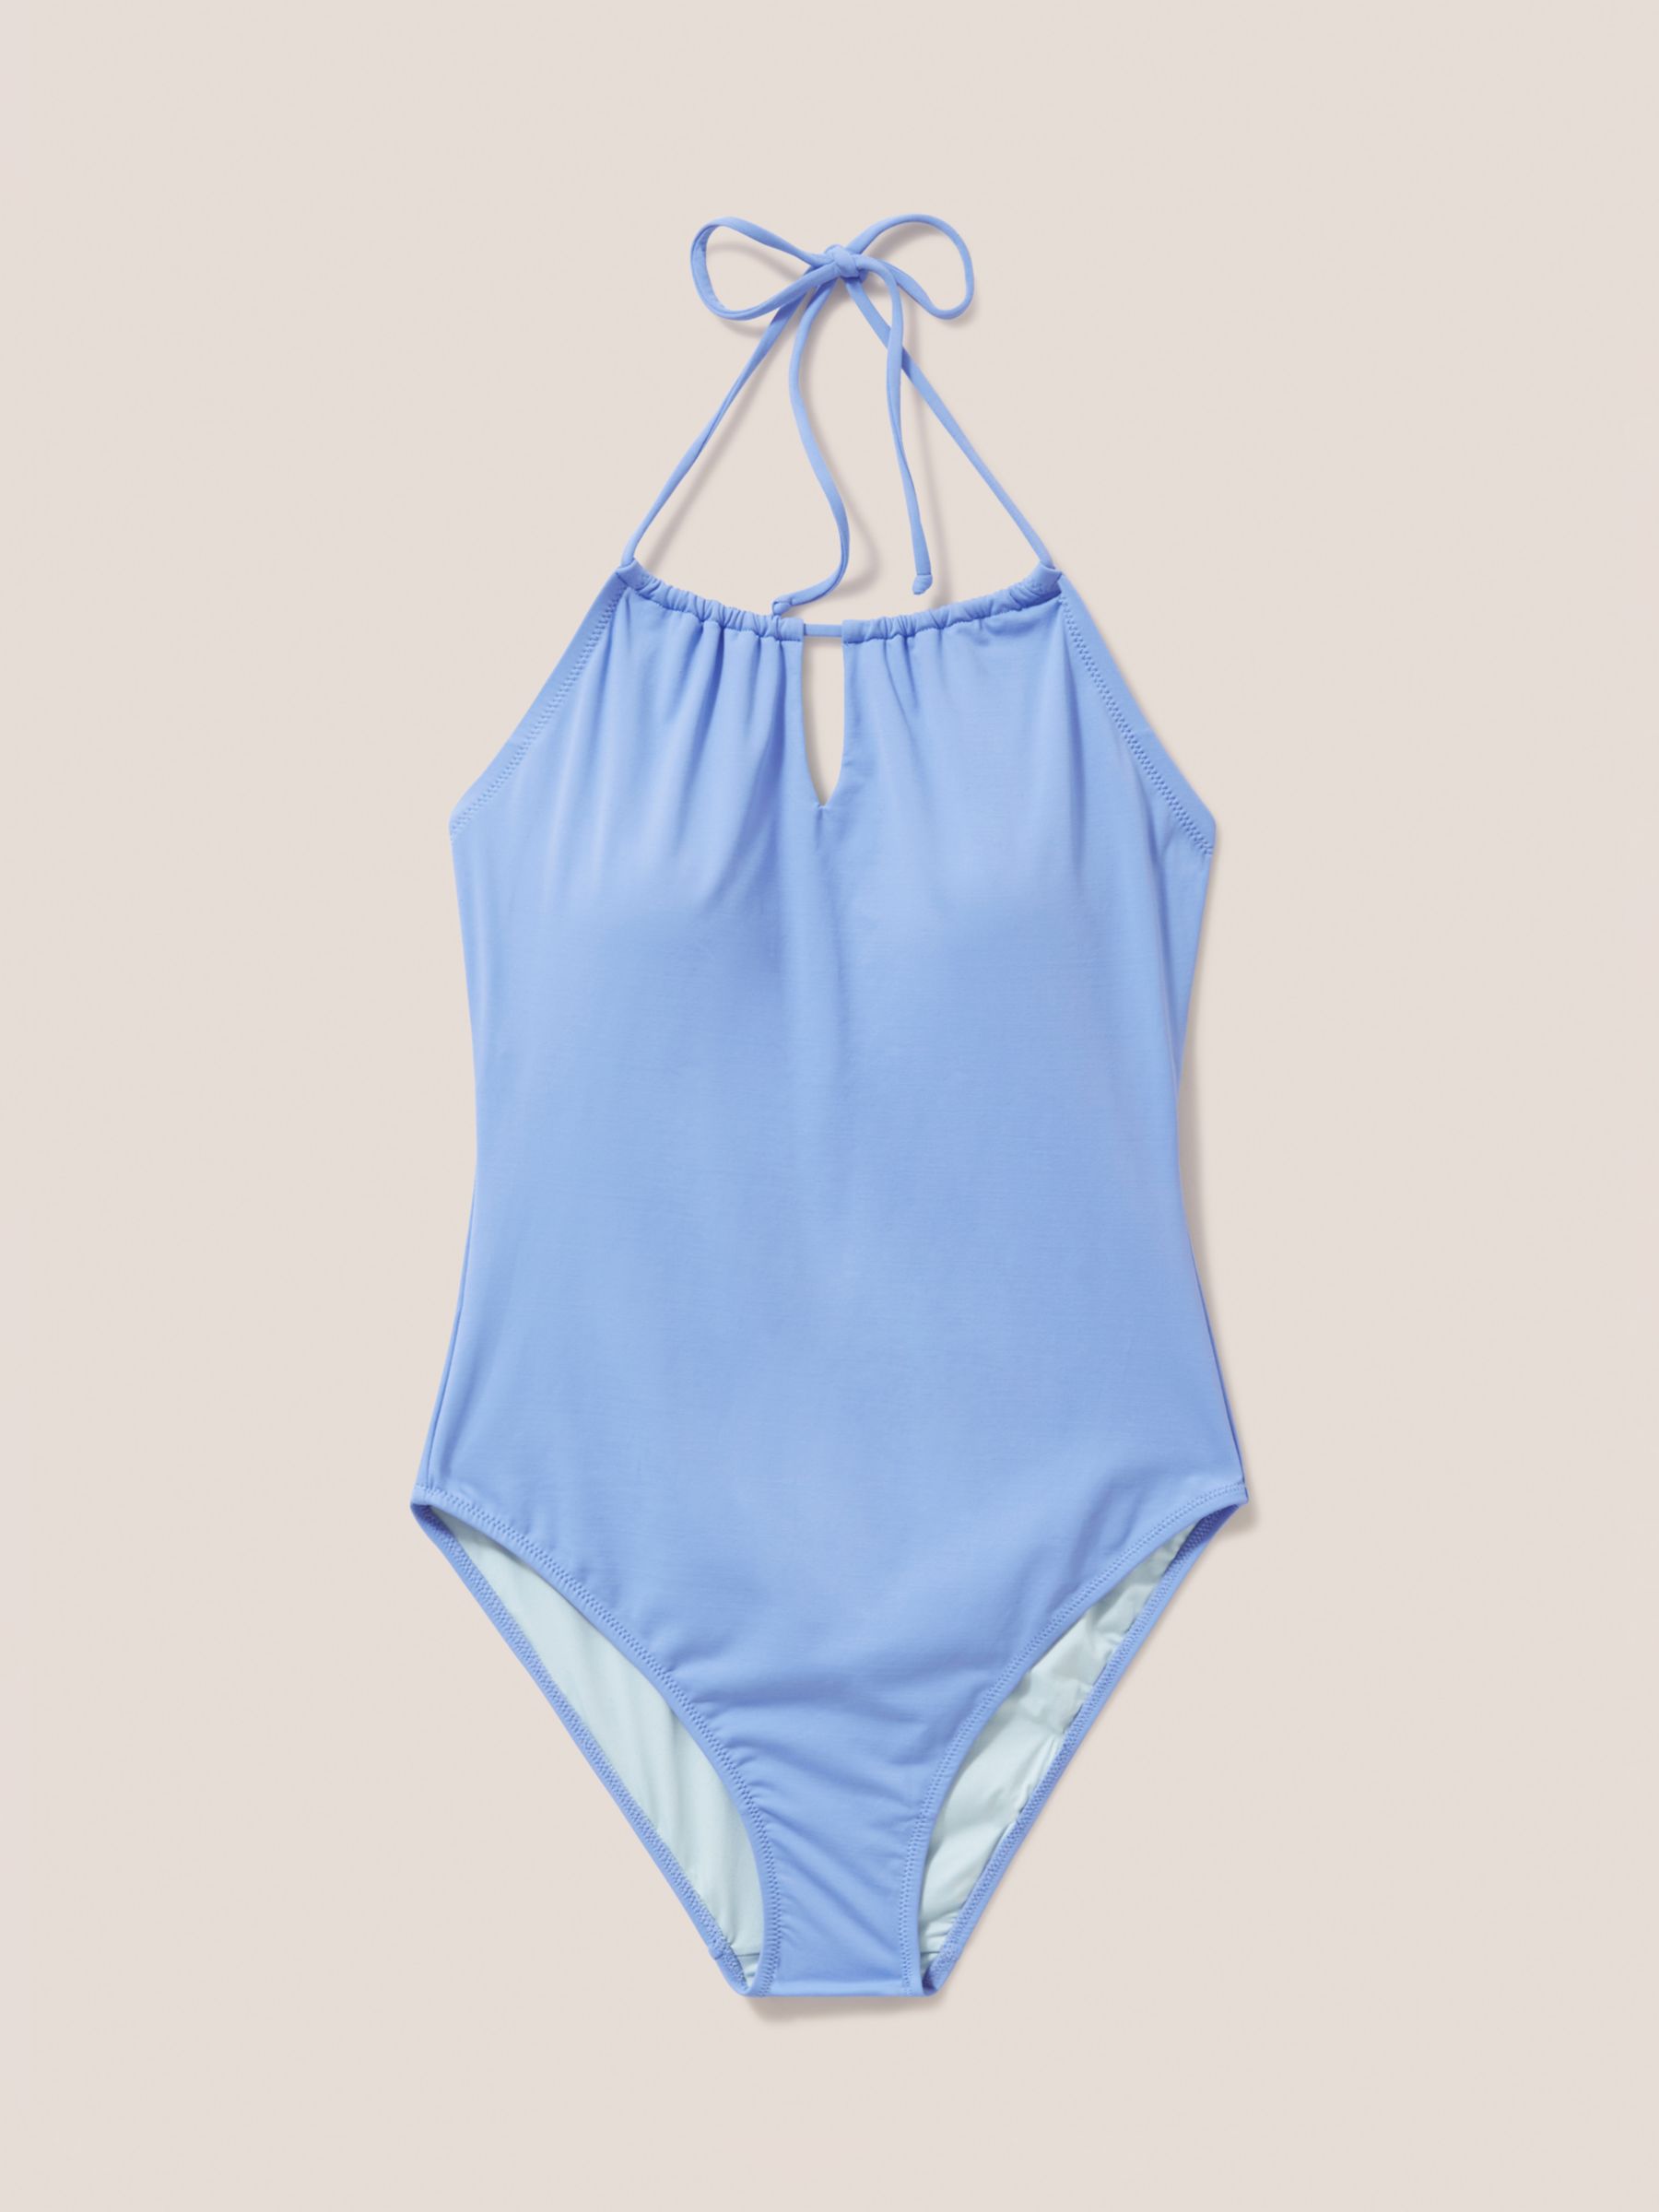 White Stuff Tamarin High Leg Swimsuit, Blue, 20